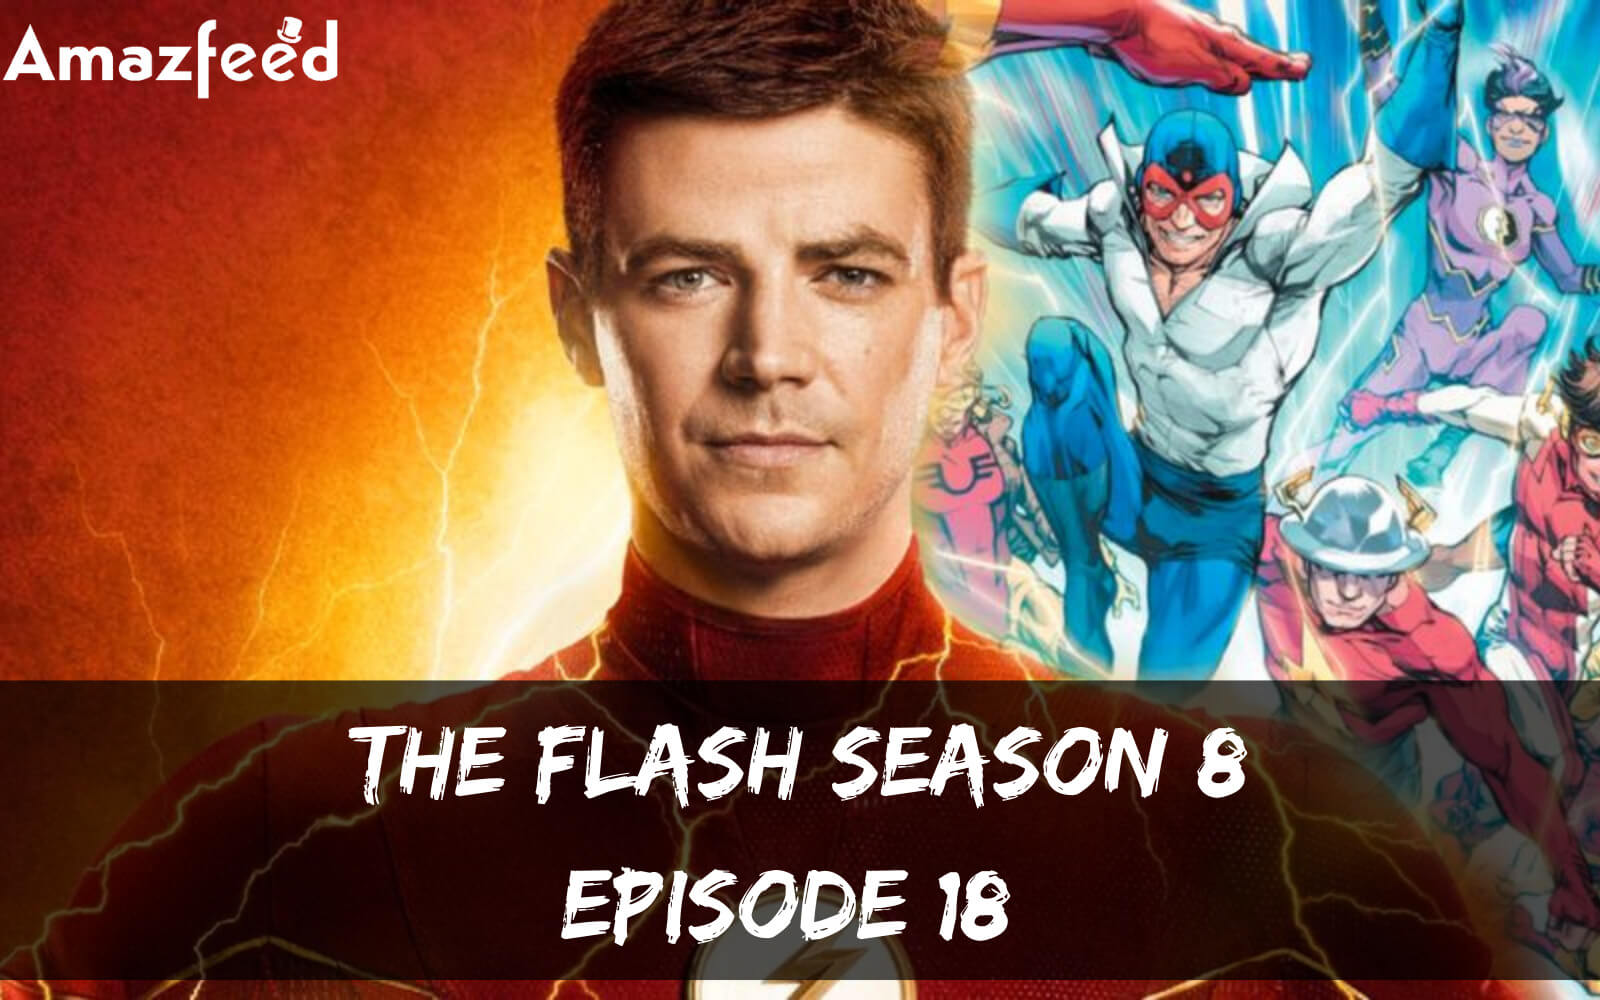 The Flash season 8 episode 18 release date